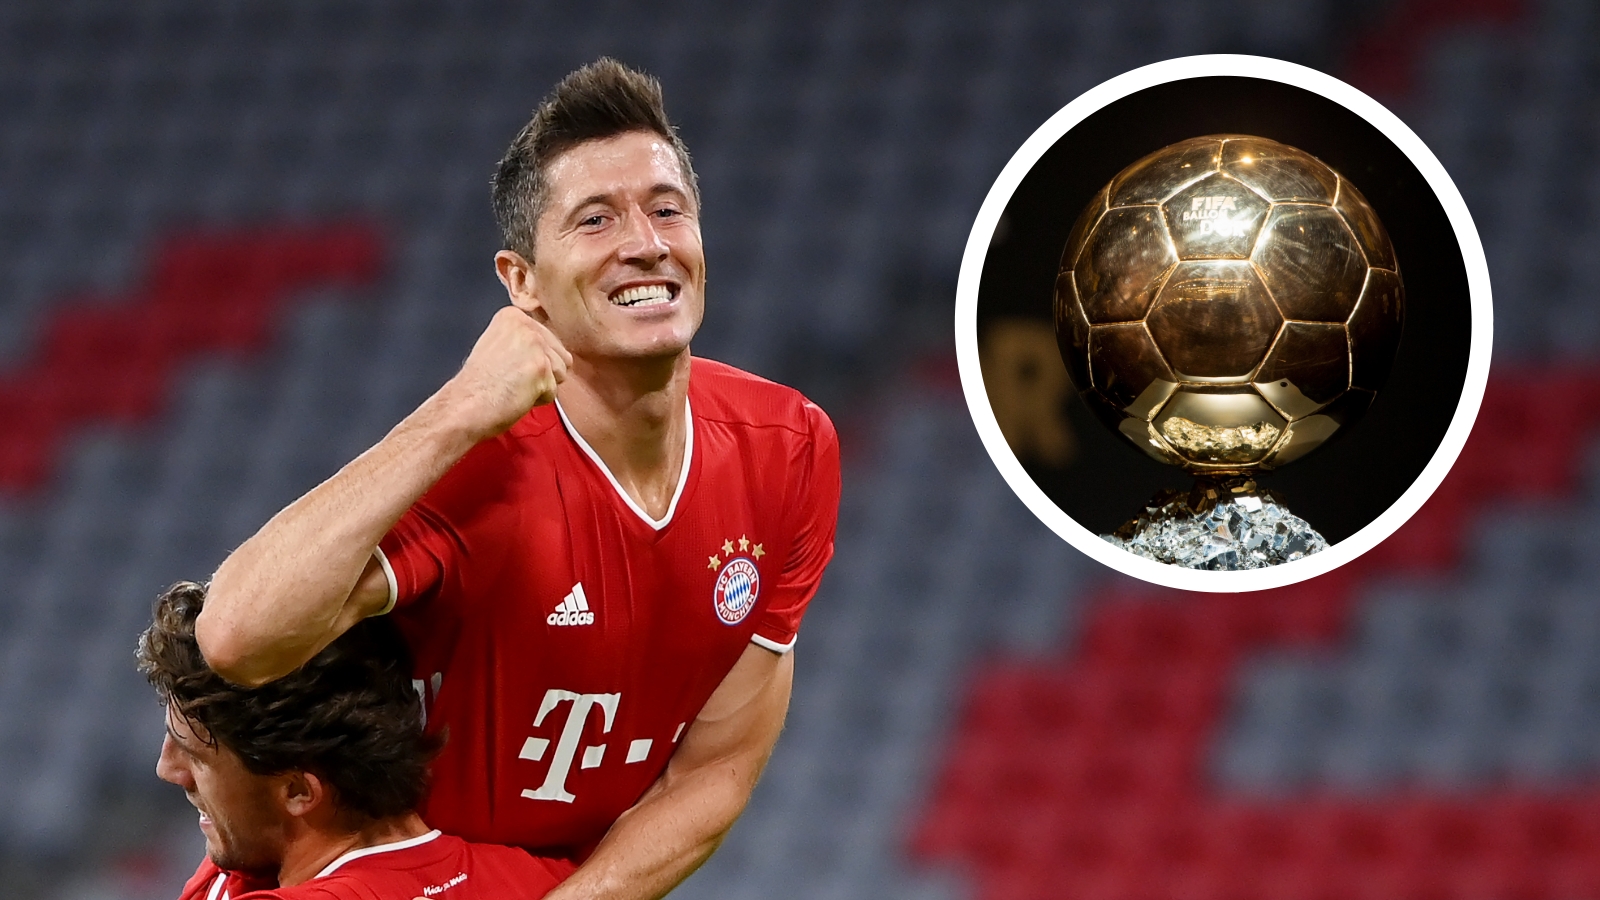 Lewandowski should start a petition over Ballon d'Or cancellation - Ferdinand